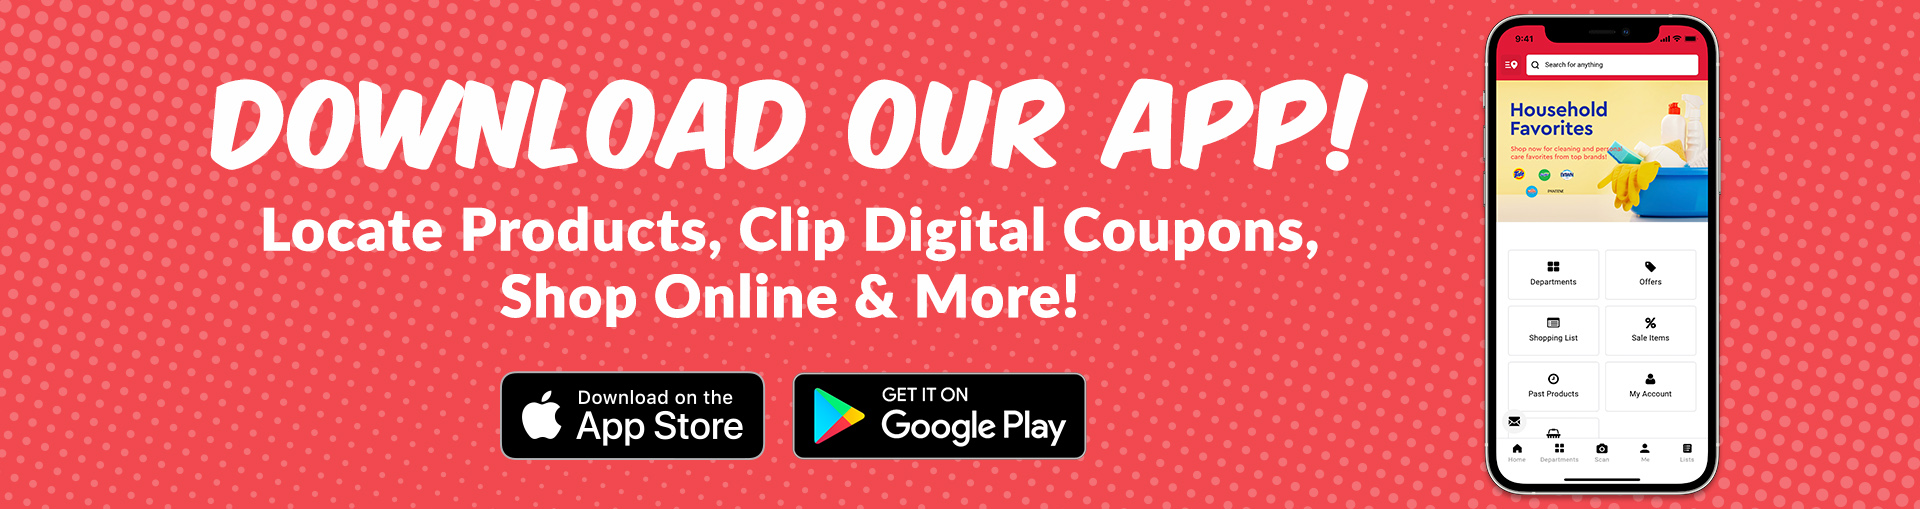 Kiwi, Shop Online, Shopping List, Digital Coupons